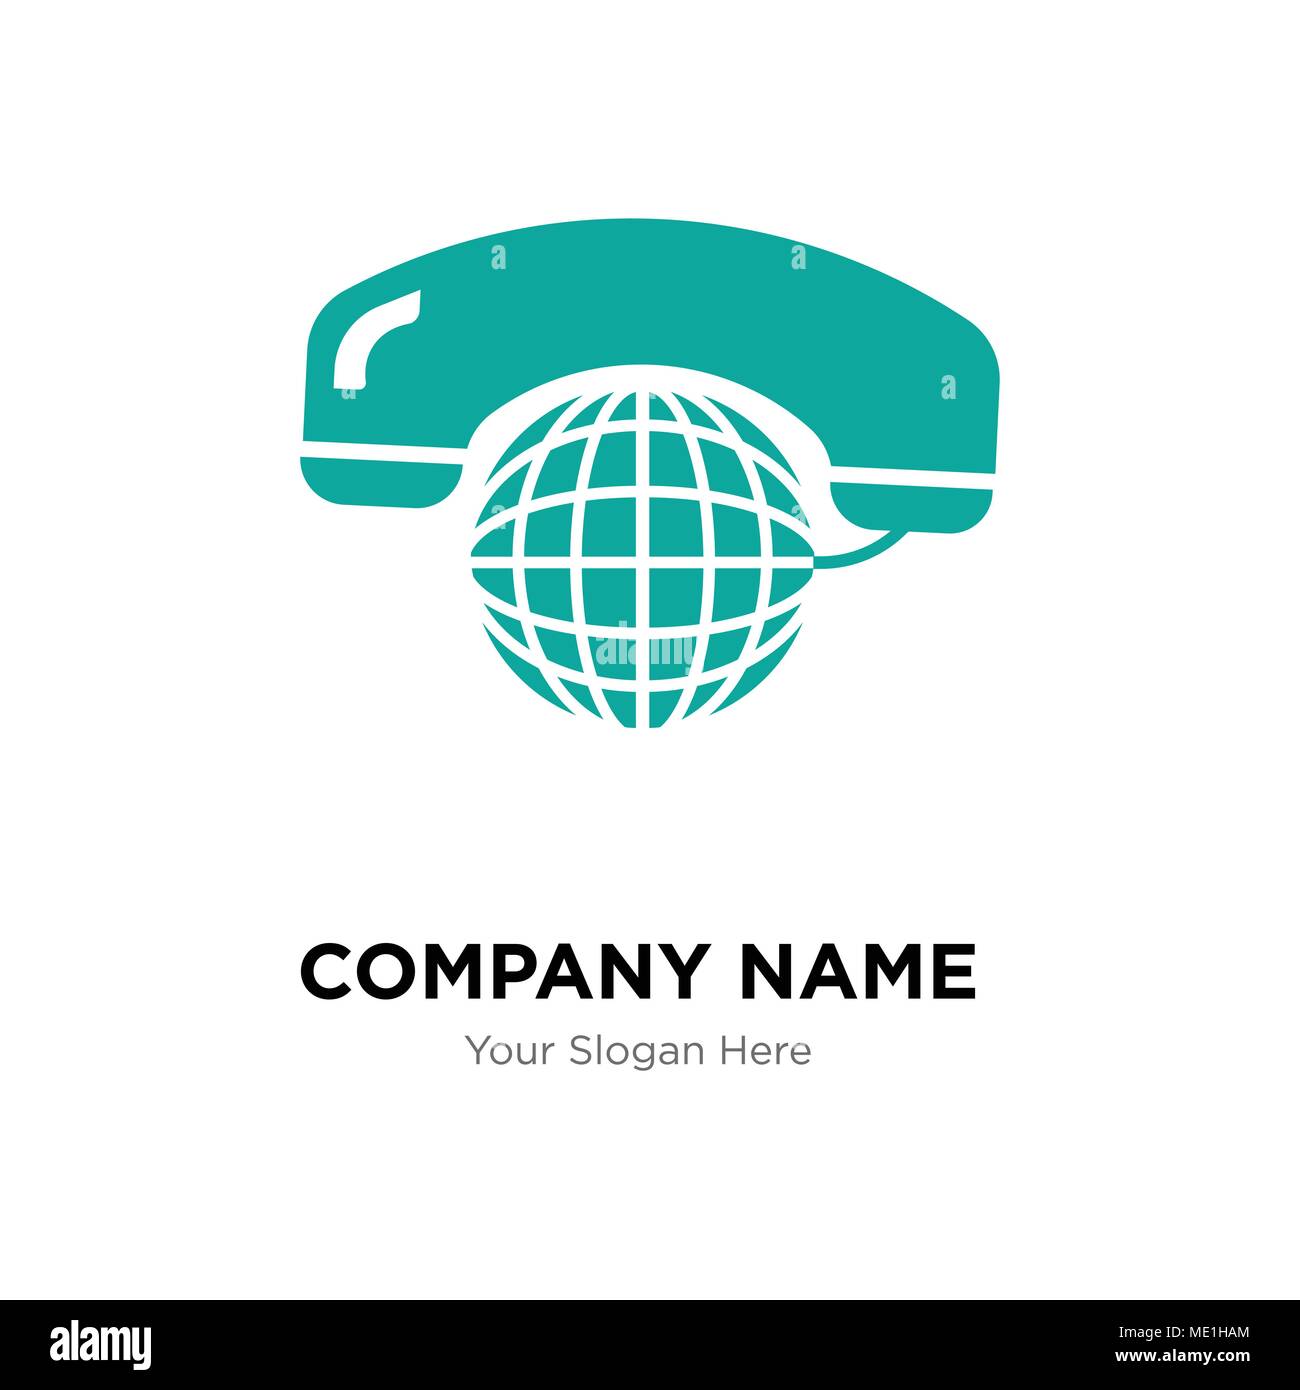 International calling service company logo design template, Business corporate vector icon Stock Vector